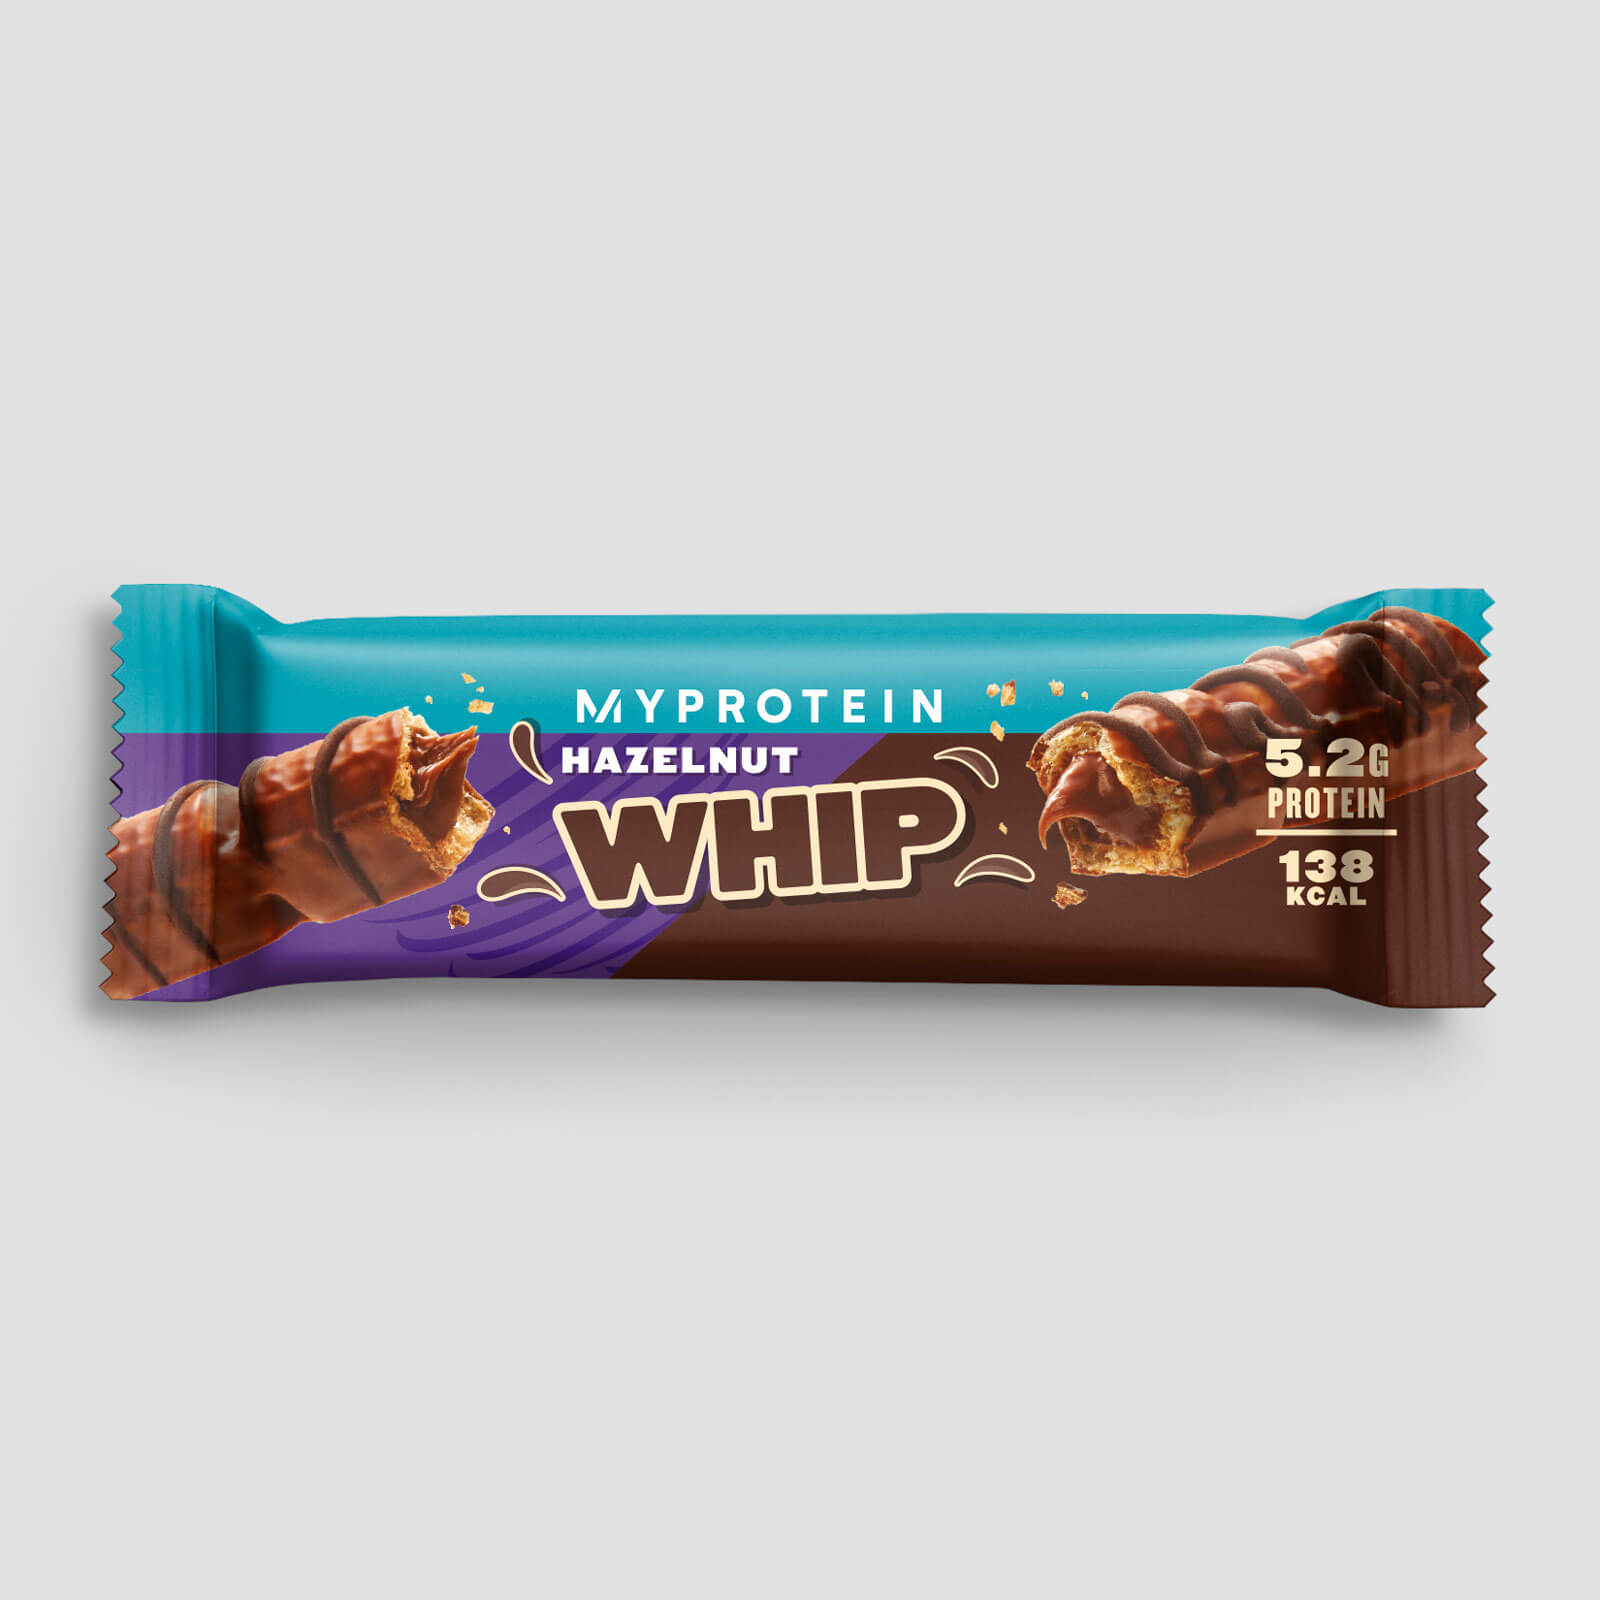 Myprotein Hazelnut Whip (Sample) - 24g - Chocolate e Leite